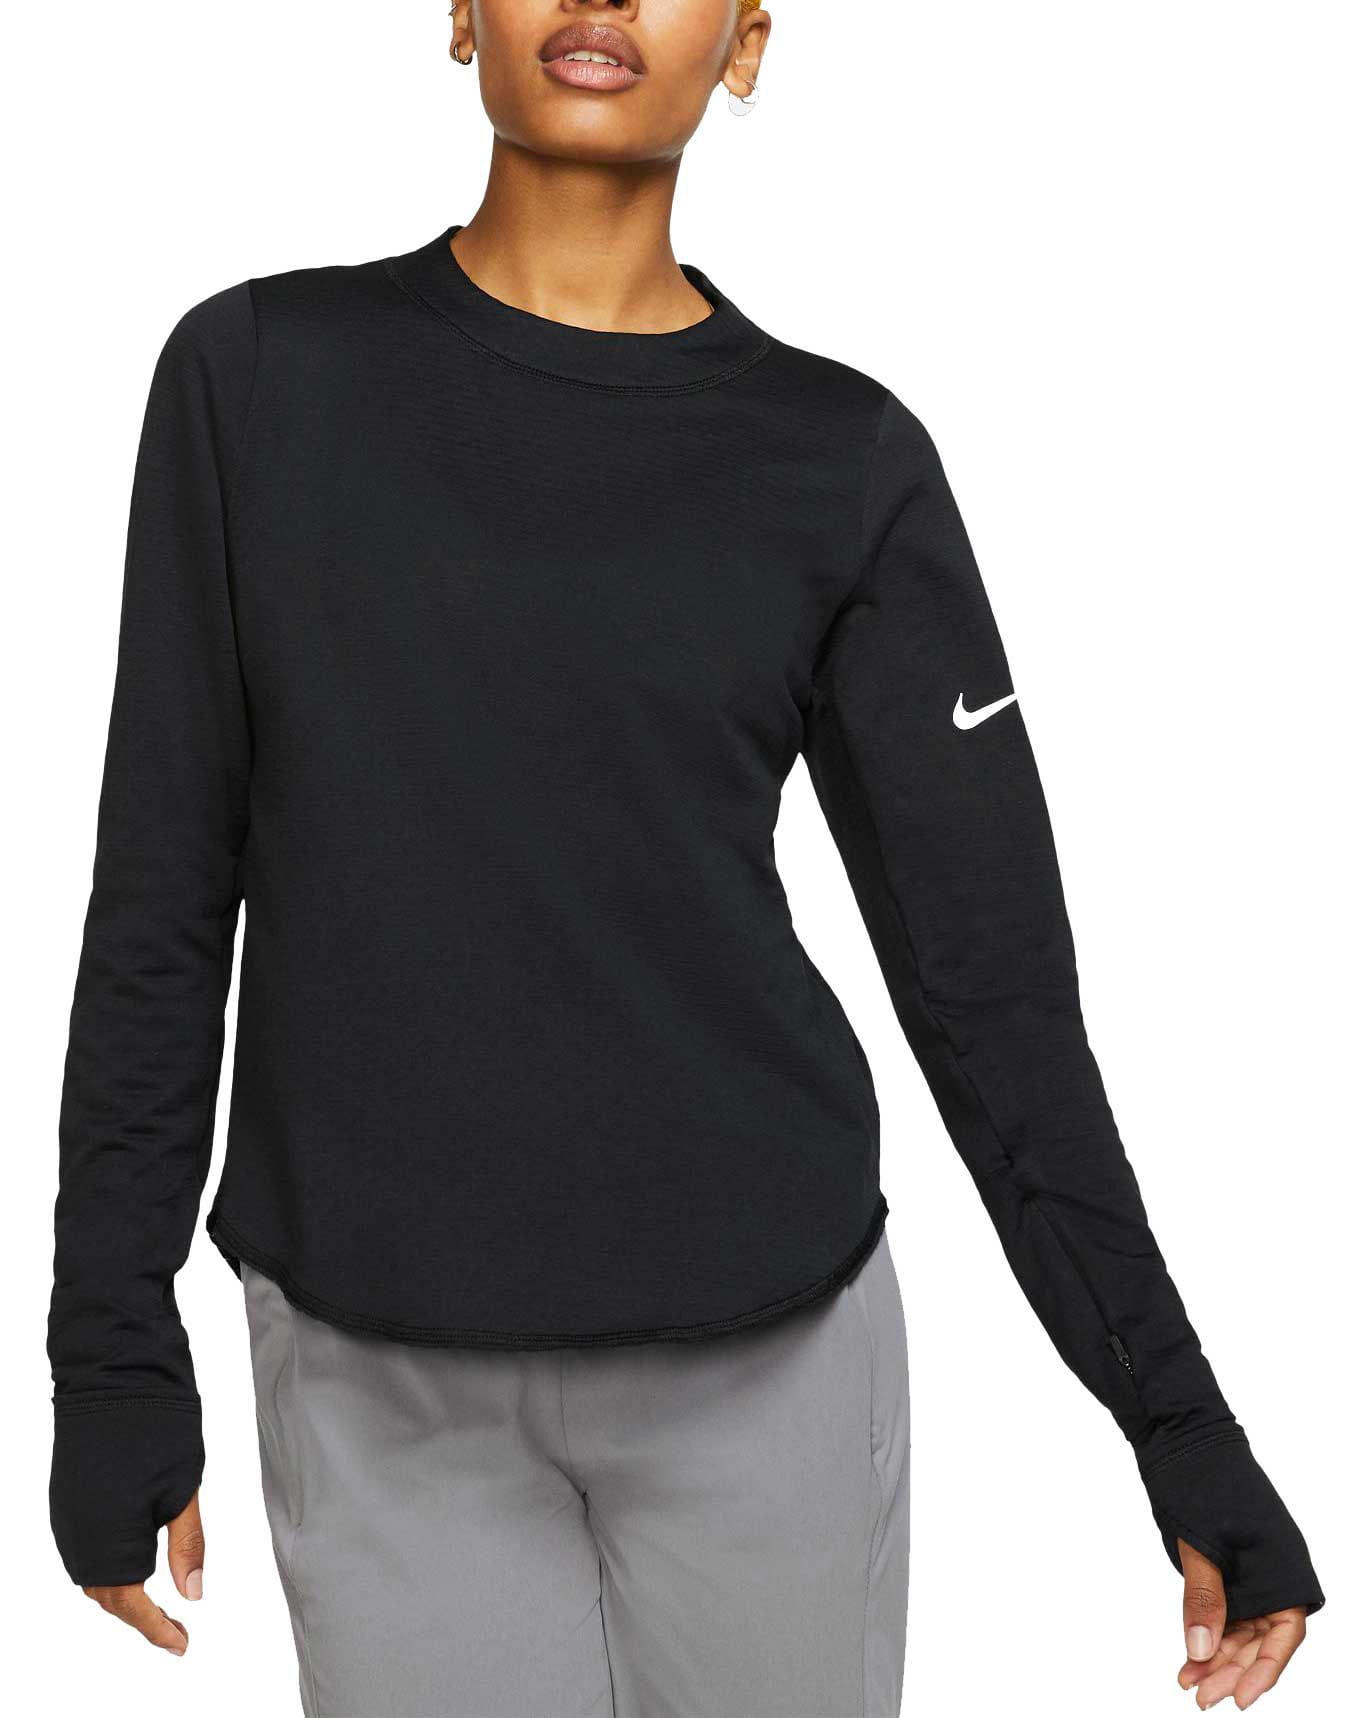 Nike - Nike Women's Sphere Element 